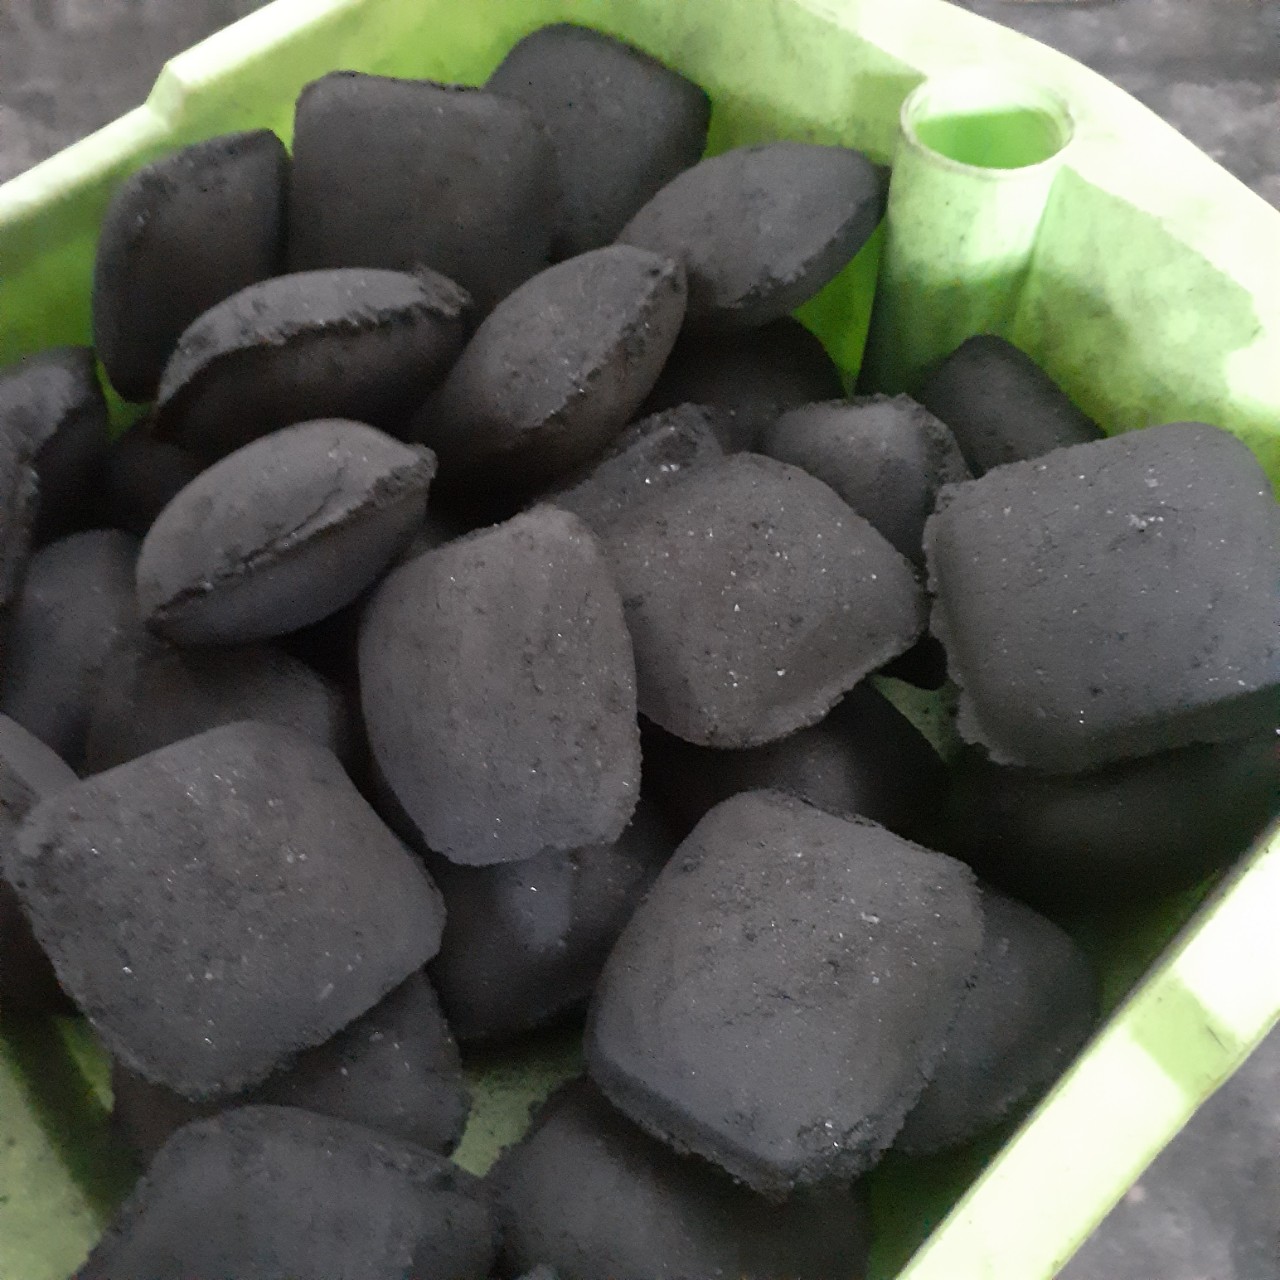 Hexagonal charcoal briquettes for grilling